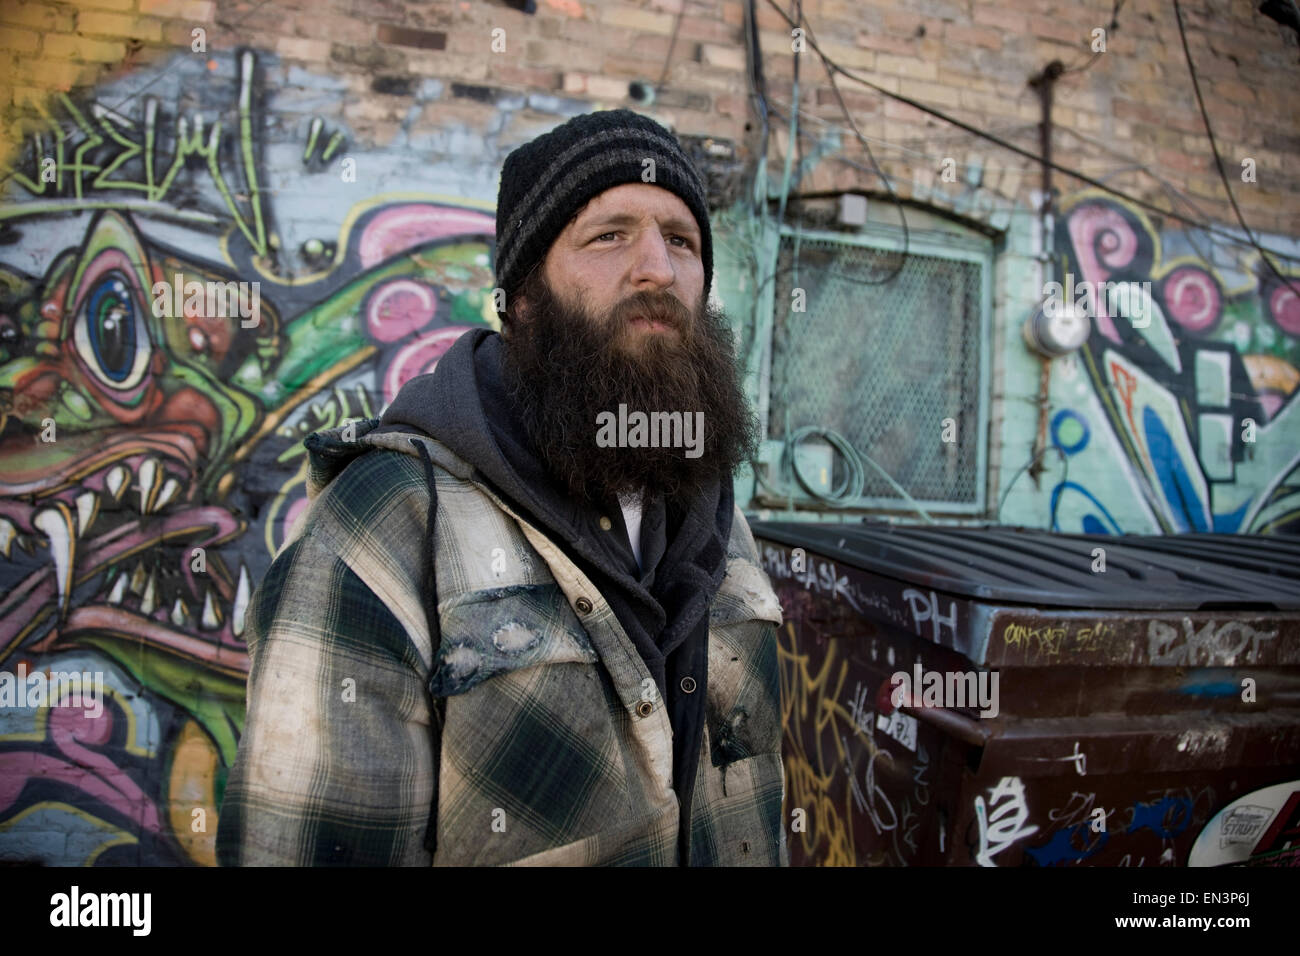 USA, Utah, Salt Lake City, homeless man near graffiti wall Stock Photo